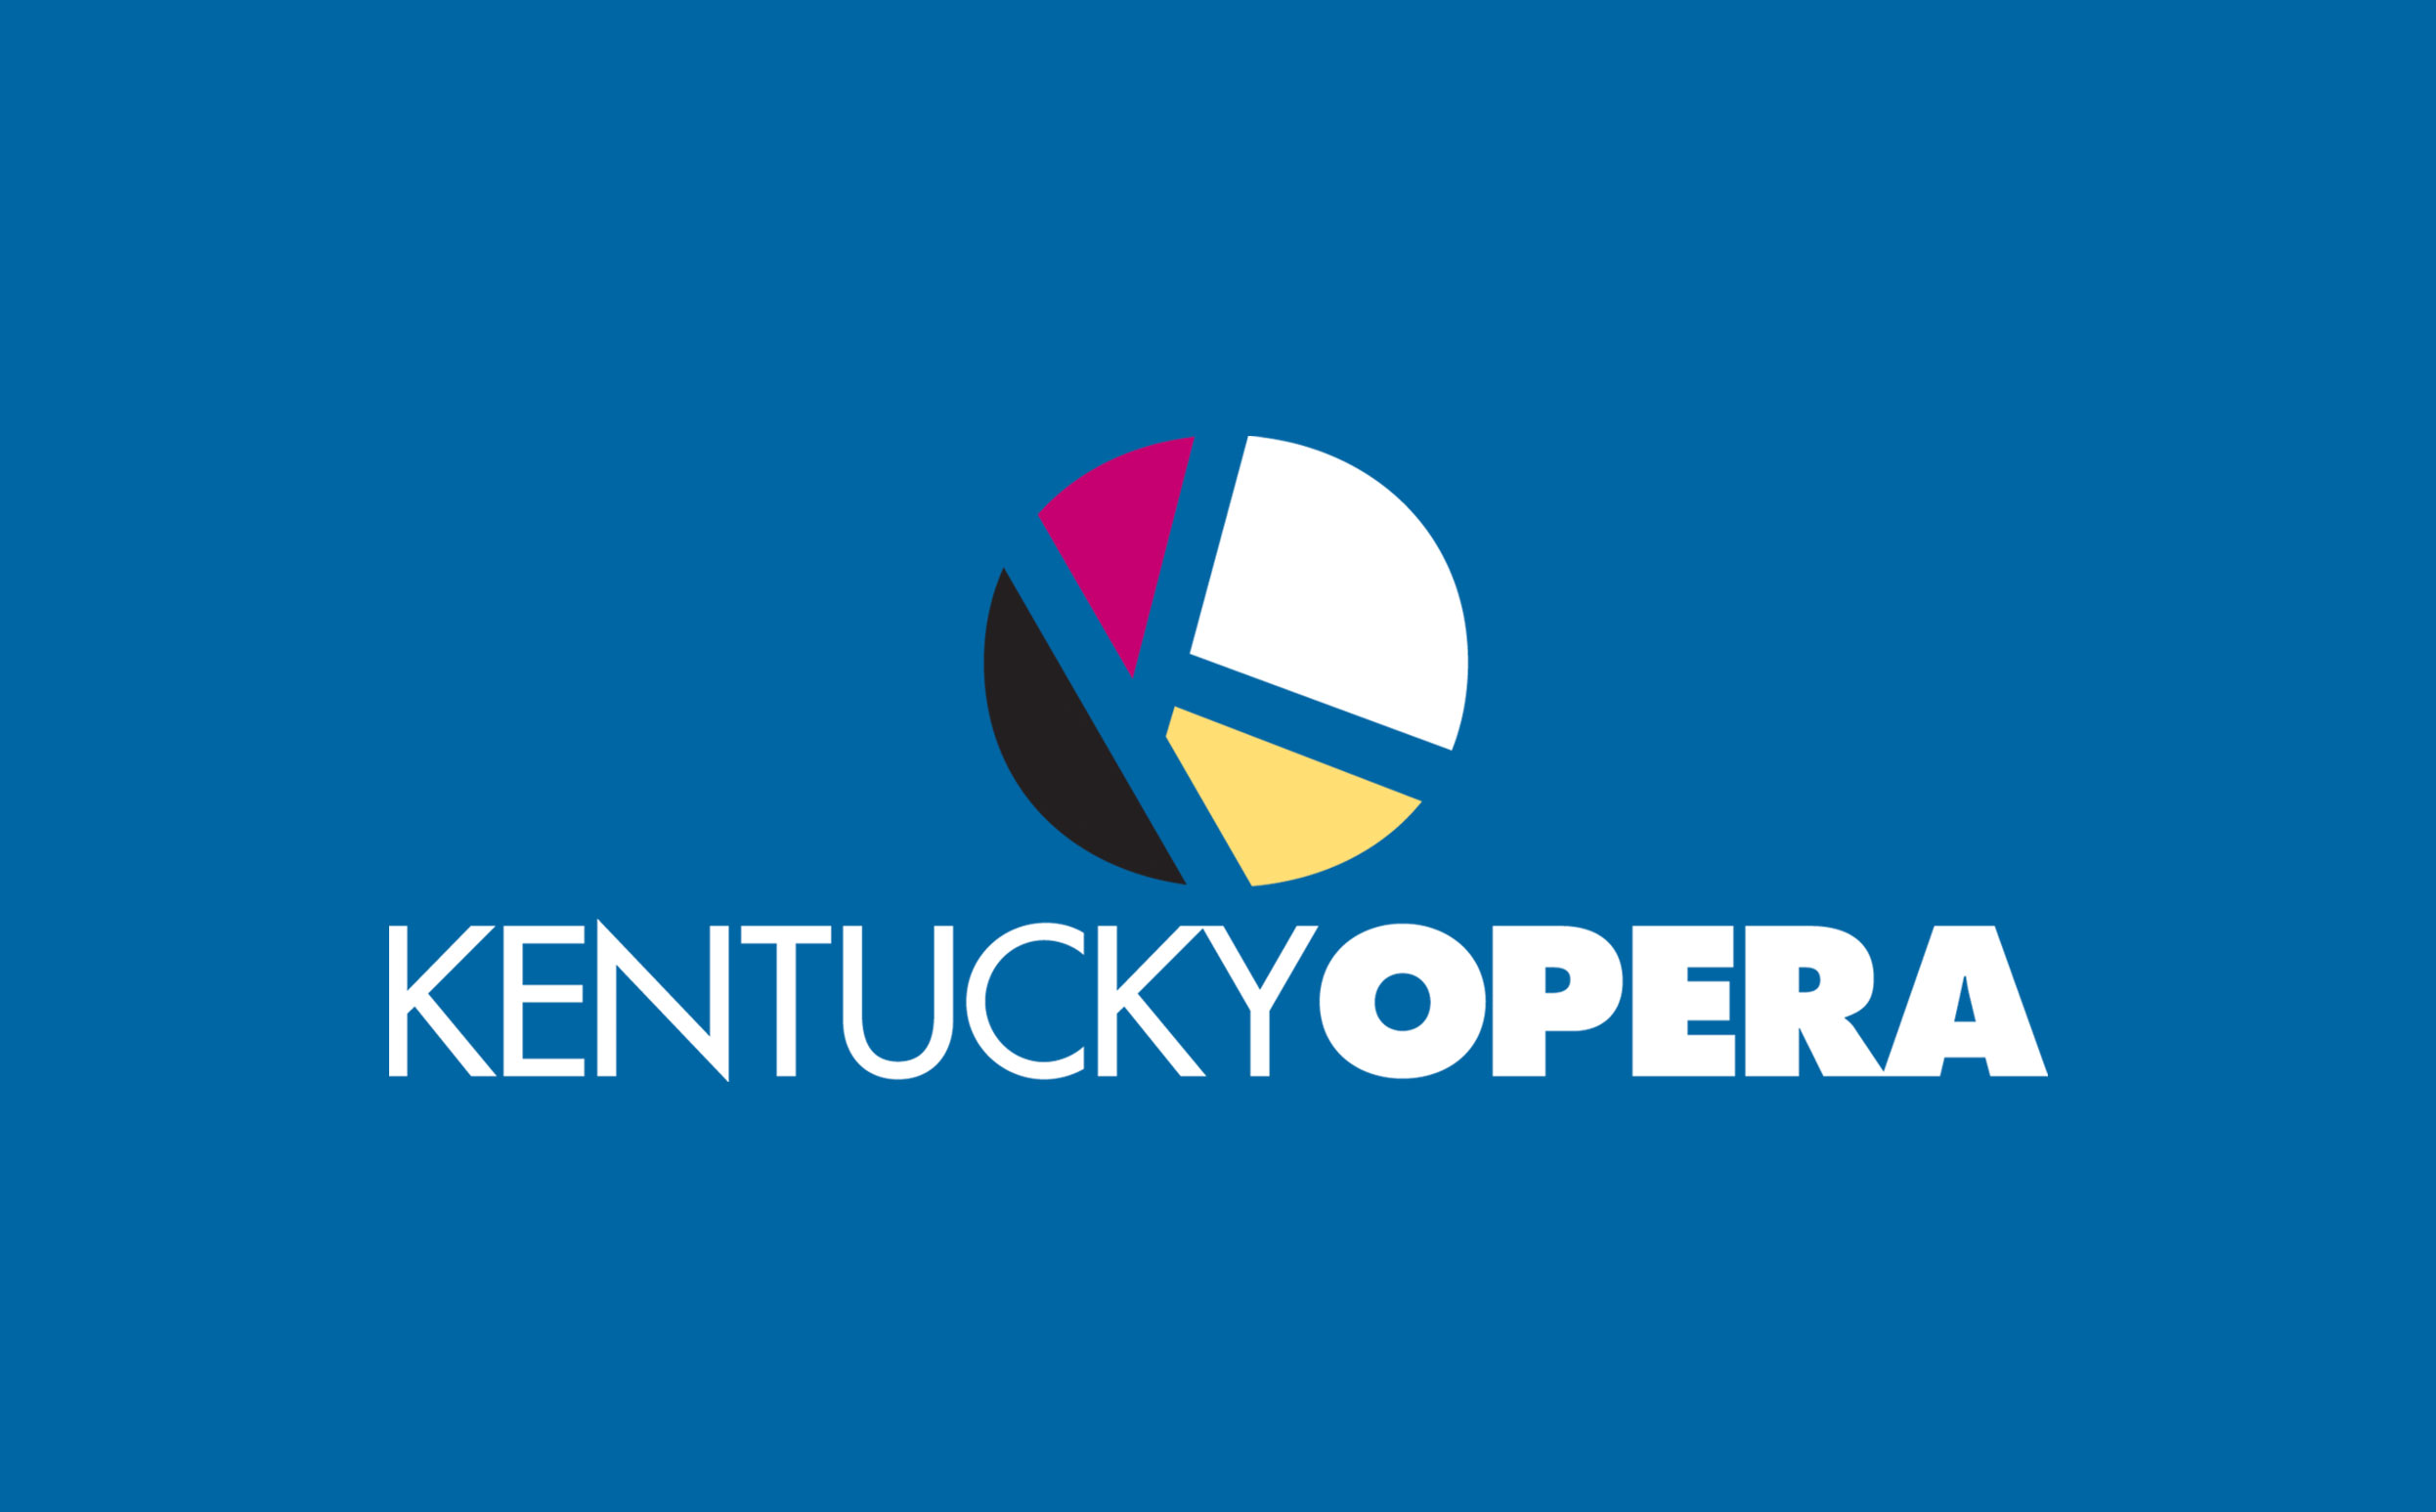 Kentucky Opera